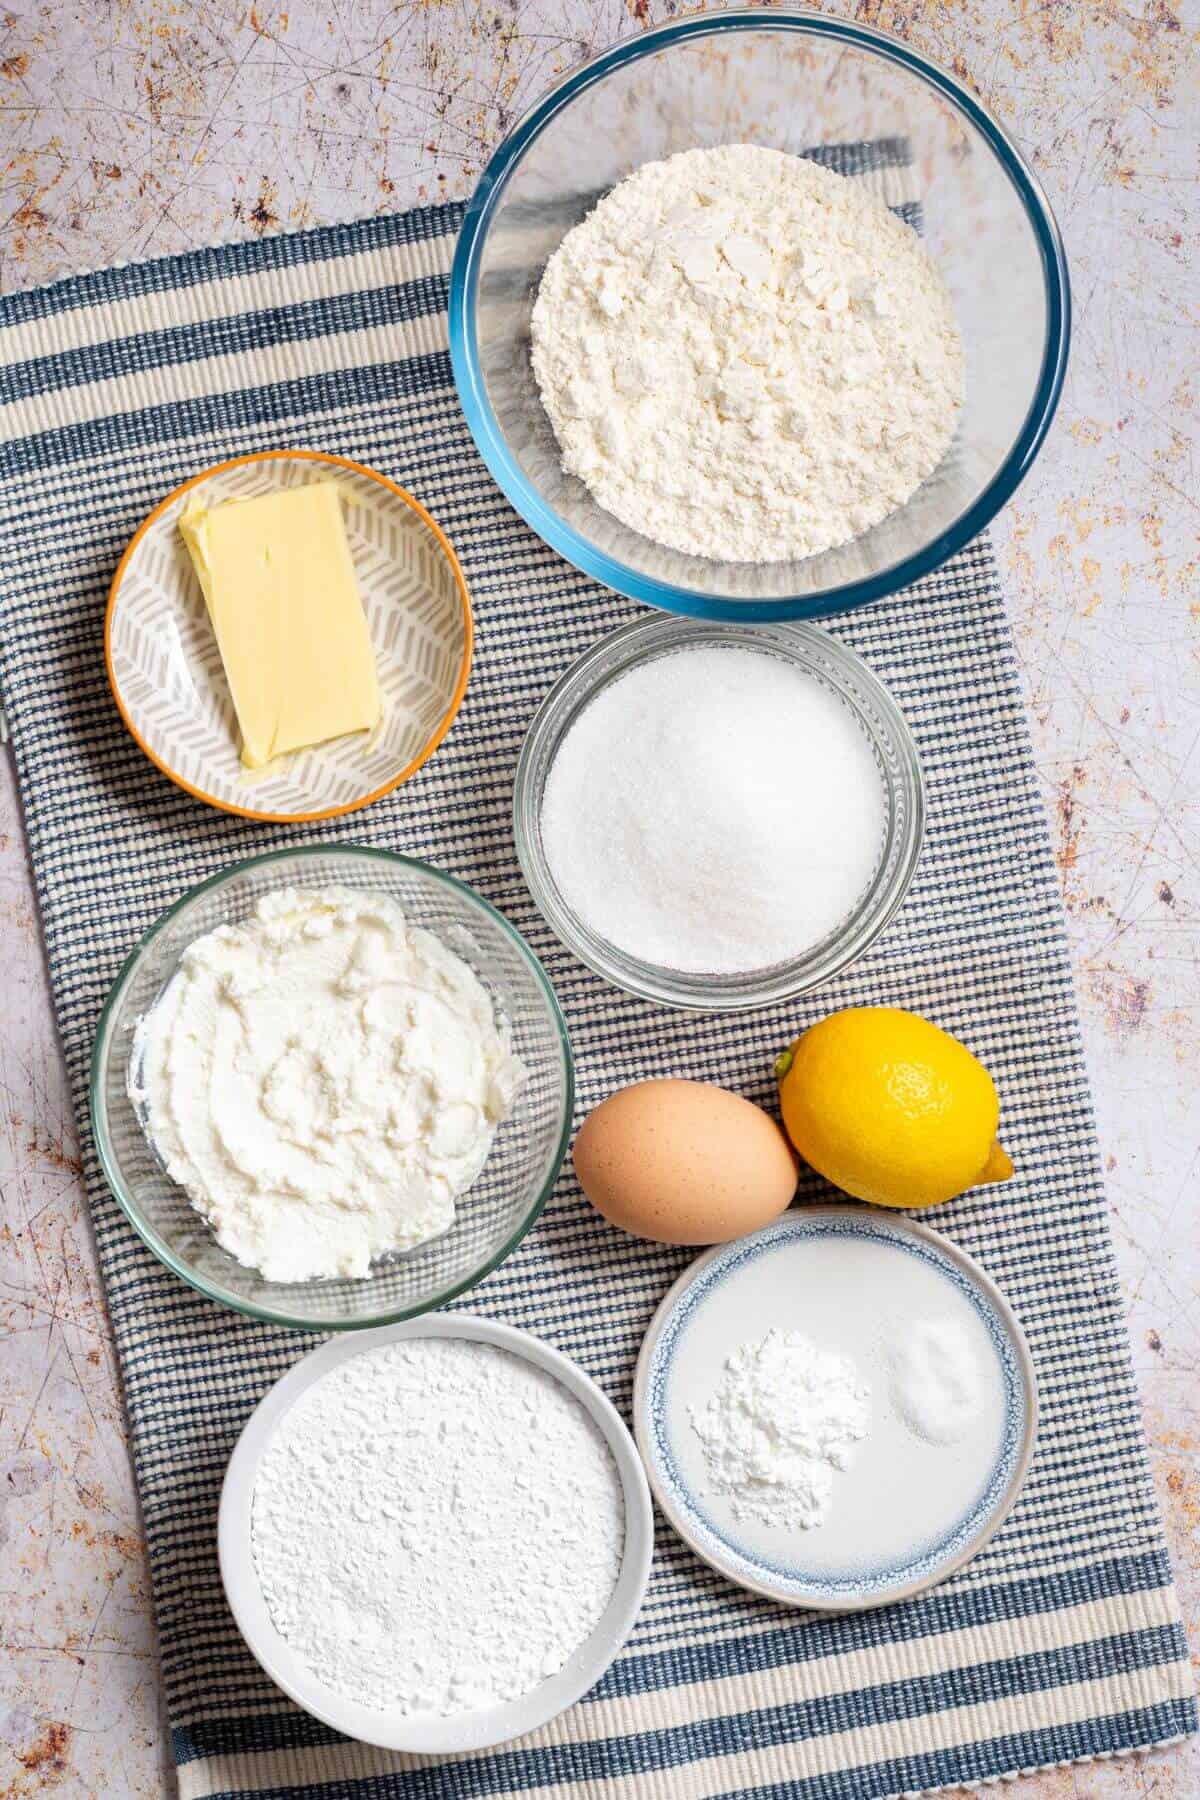 Ingredients for lemon ricotta cookies recipe.